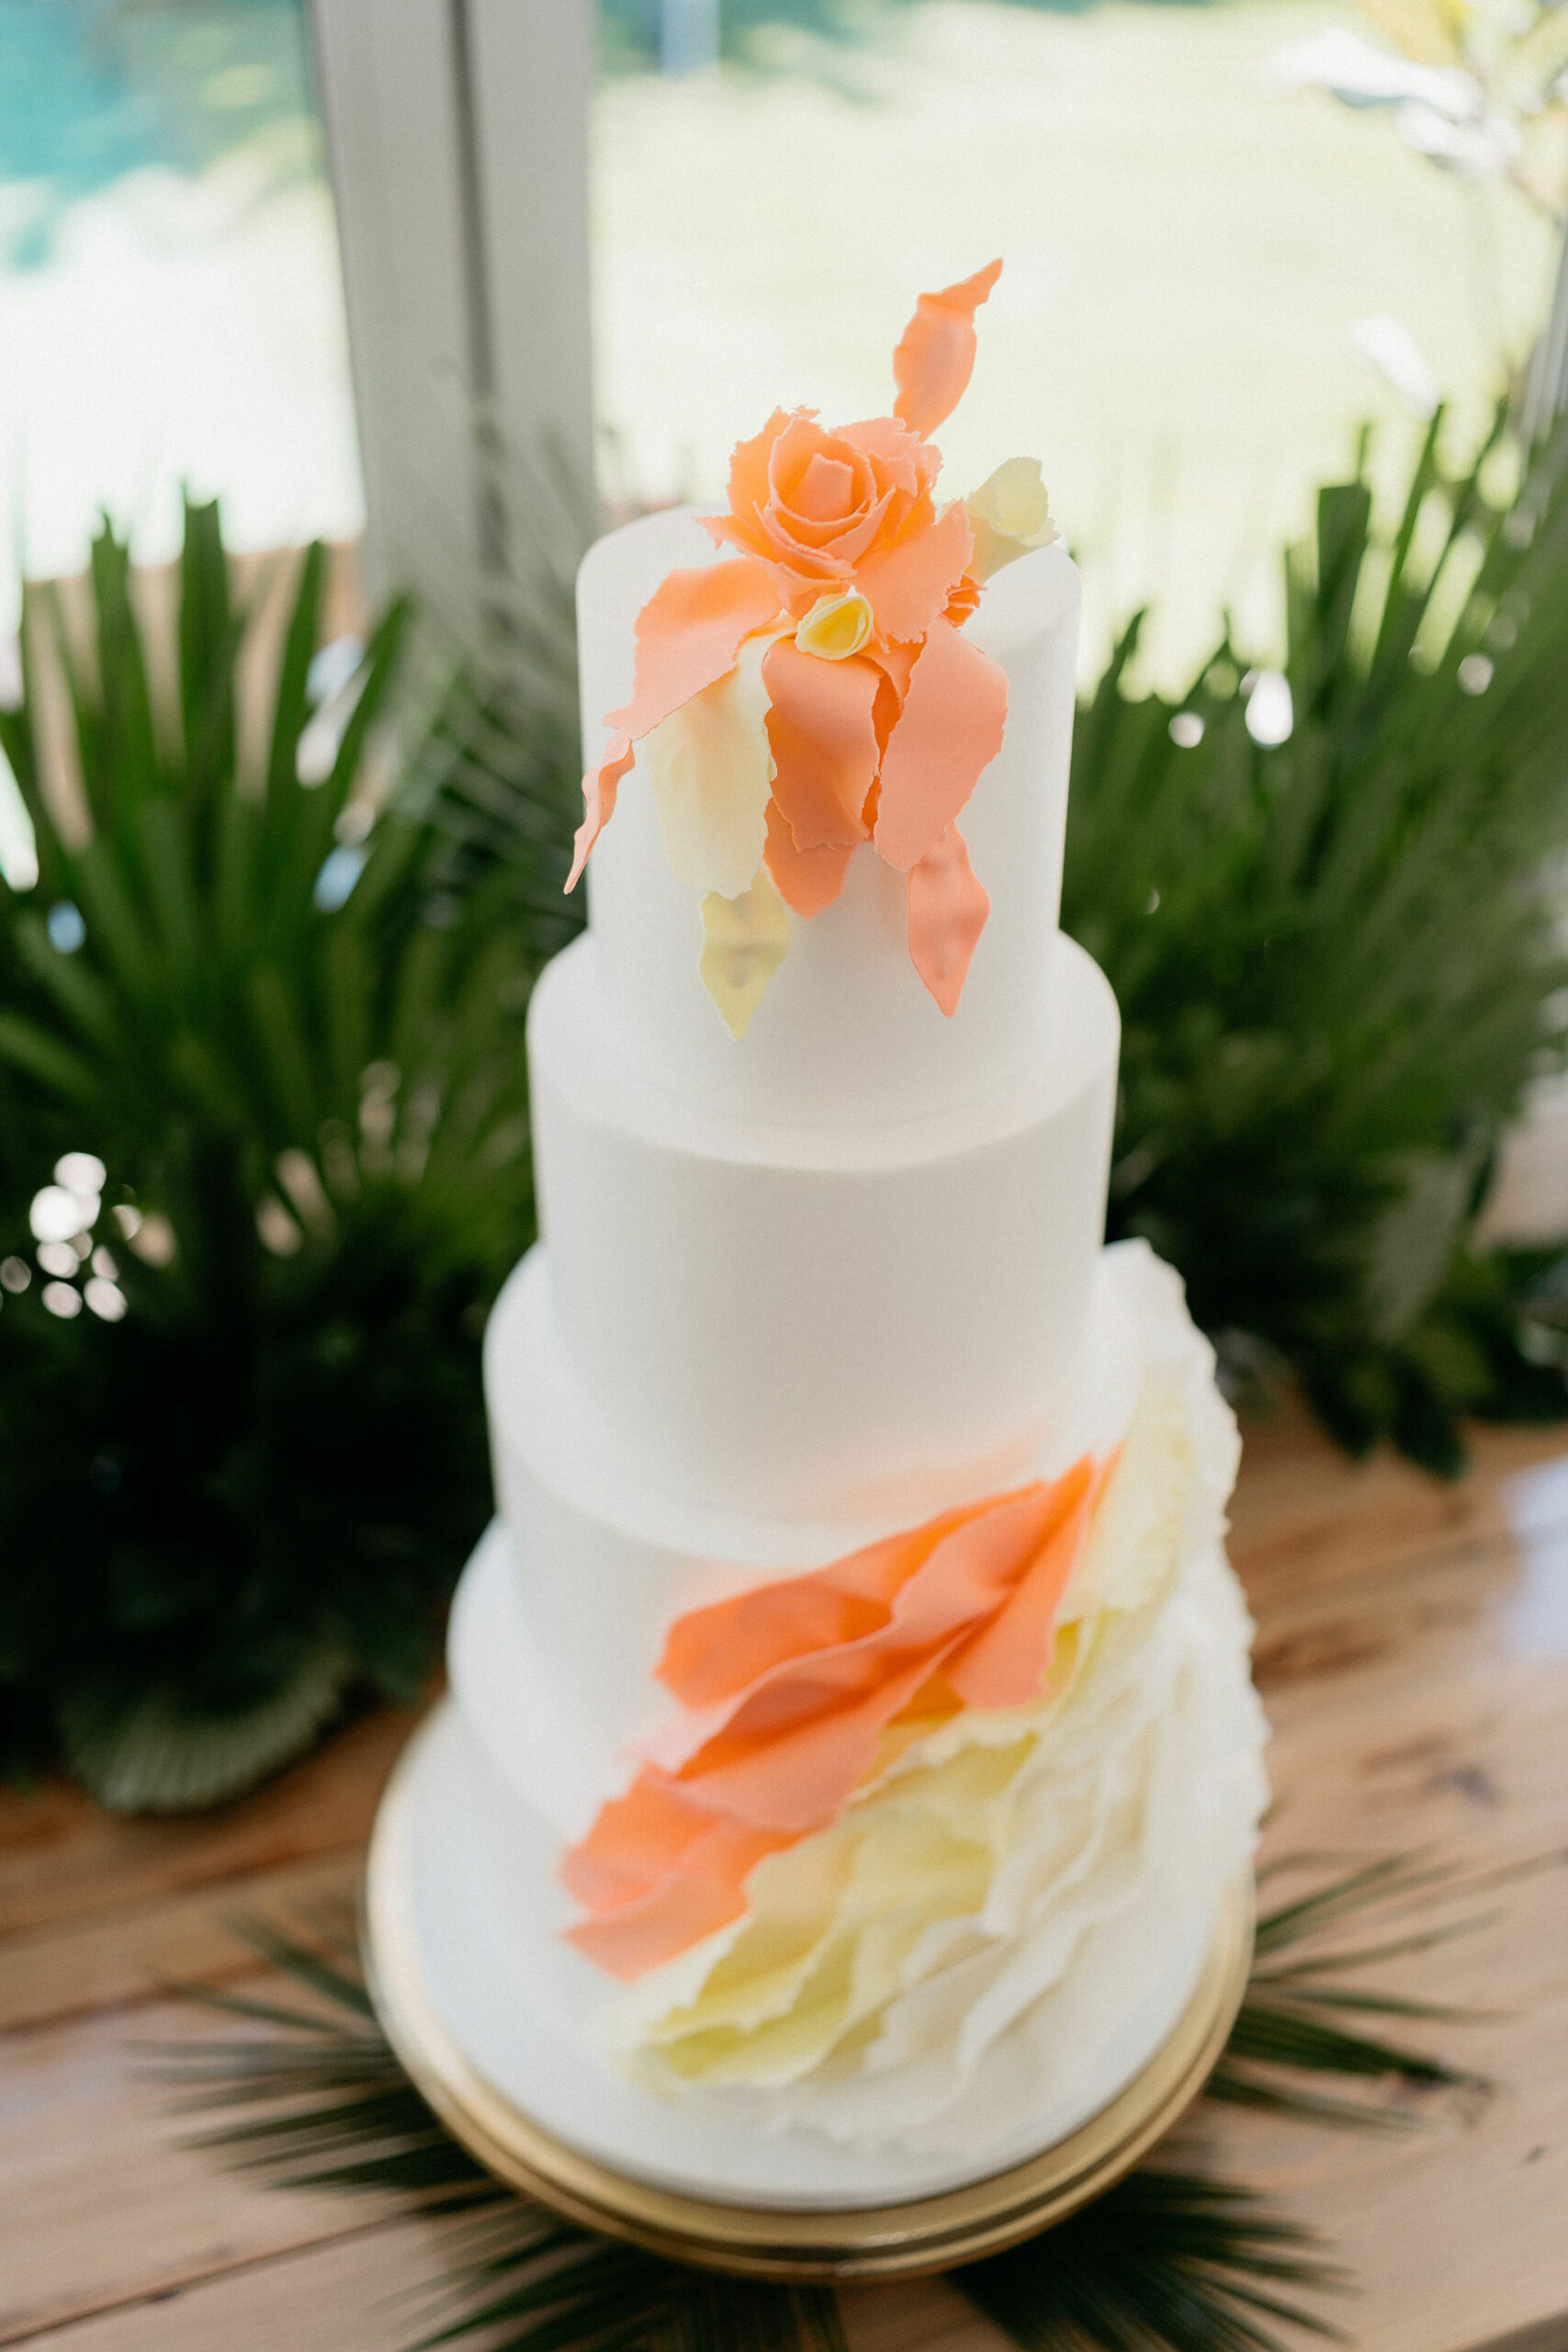 Tall white cake with orange and yellow ruffles